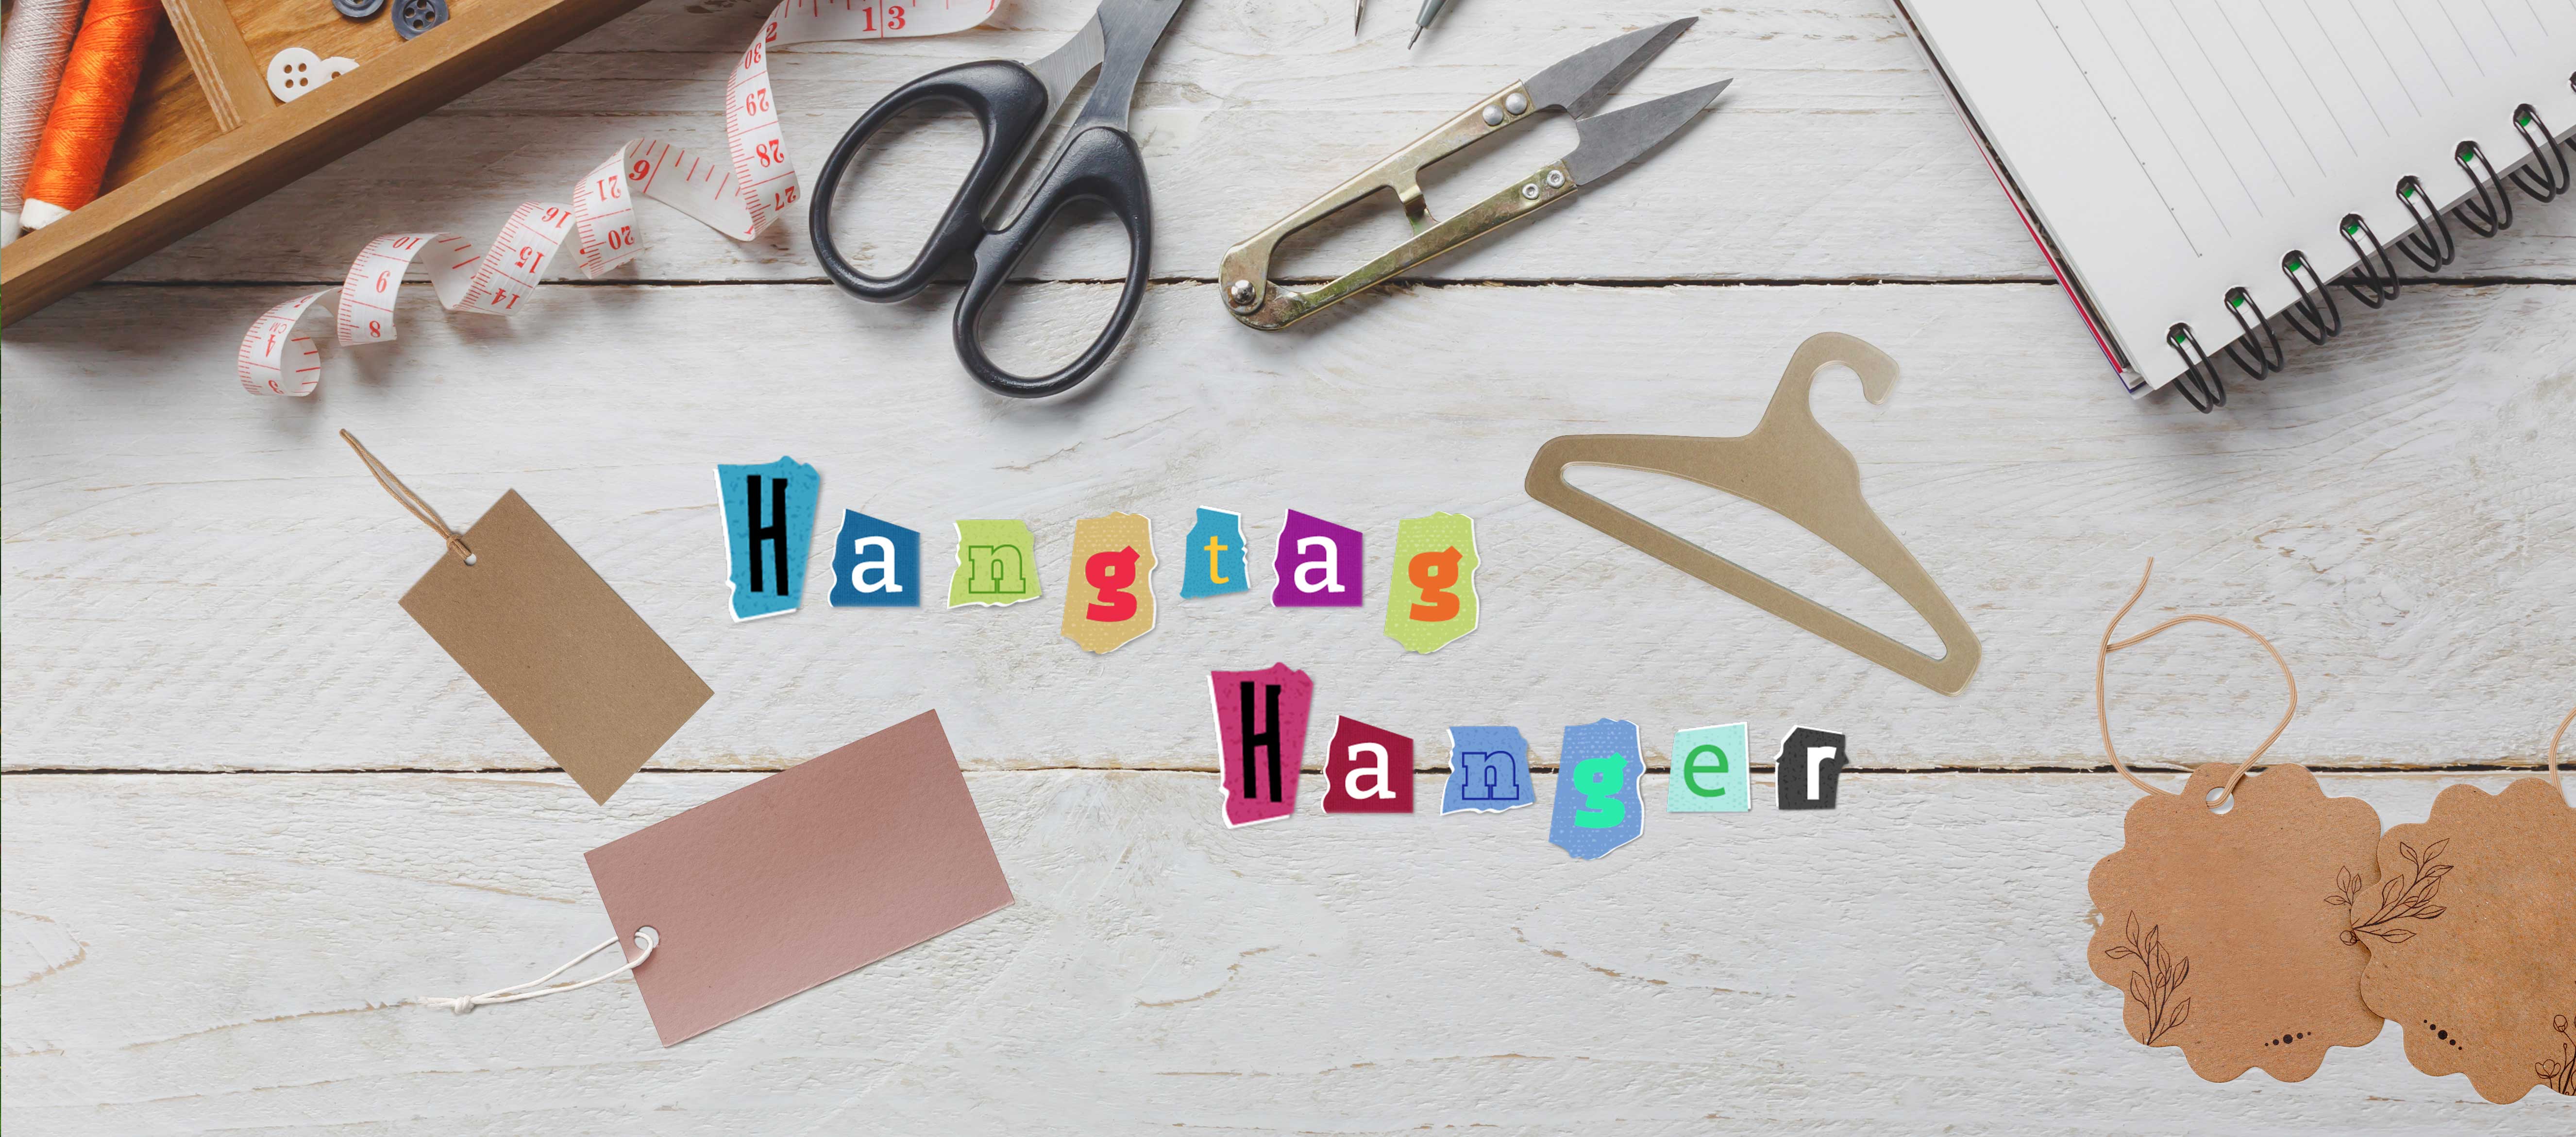 Hangtag Hanger Khang Thanh packaging company